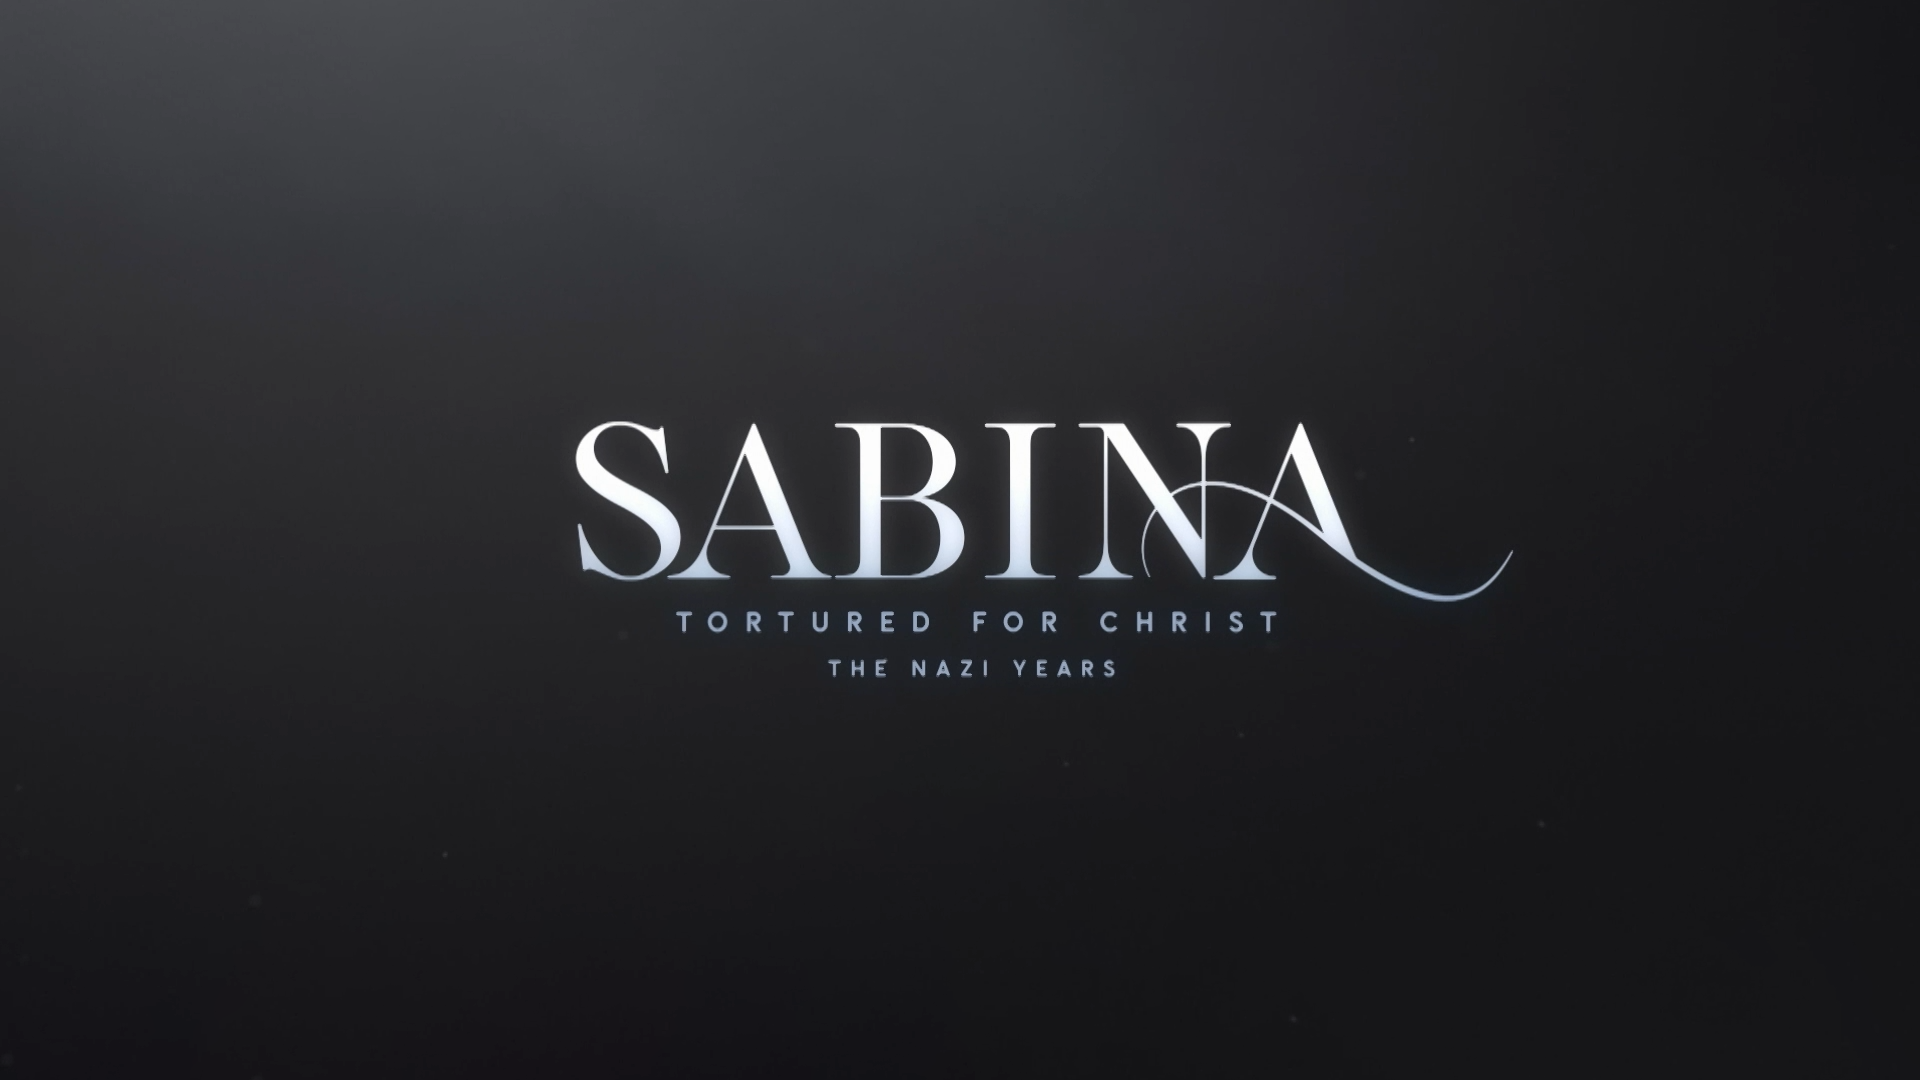 Sabina: Tortured for Christ, The Nazi Years